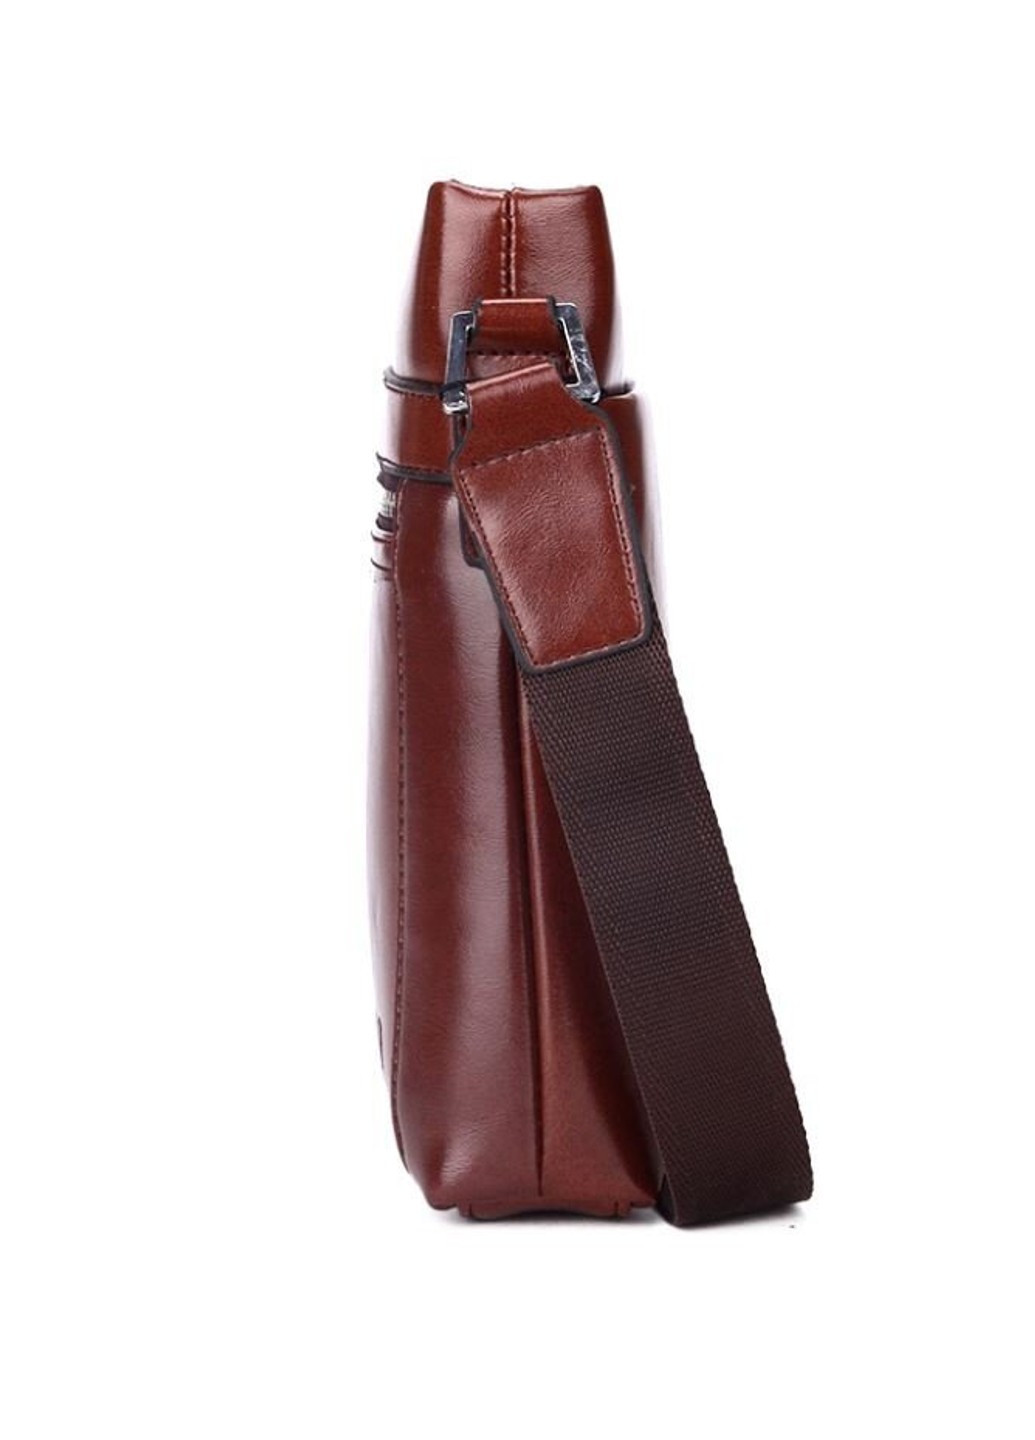 Чоловіча коричнева сумка через плече 8806-2 Polo (263360636)